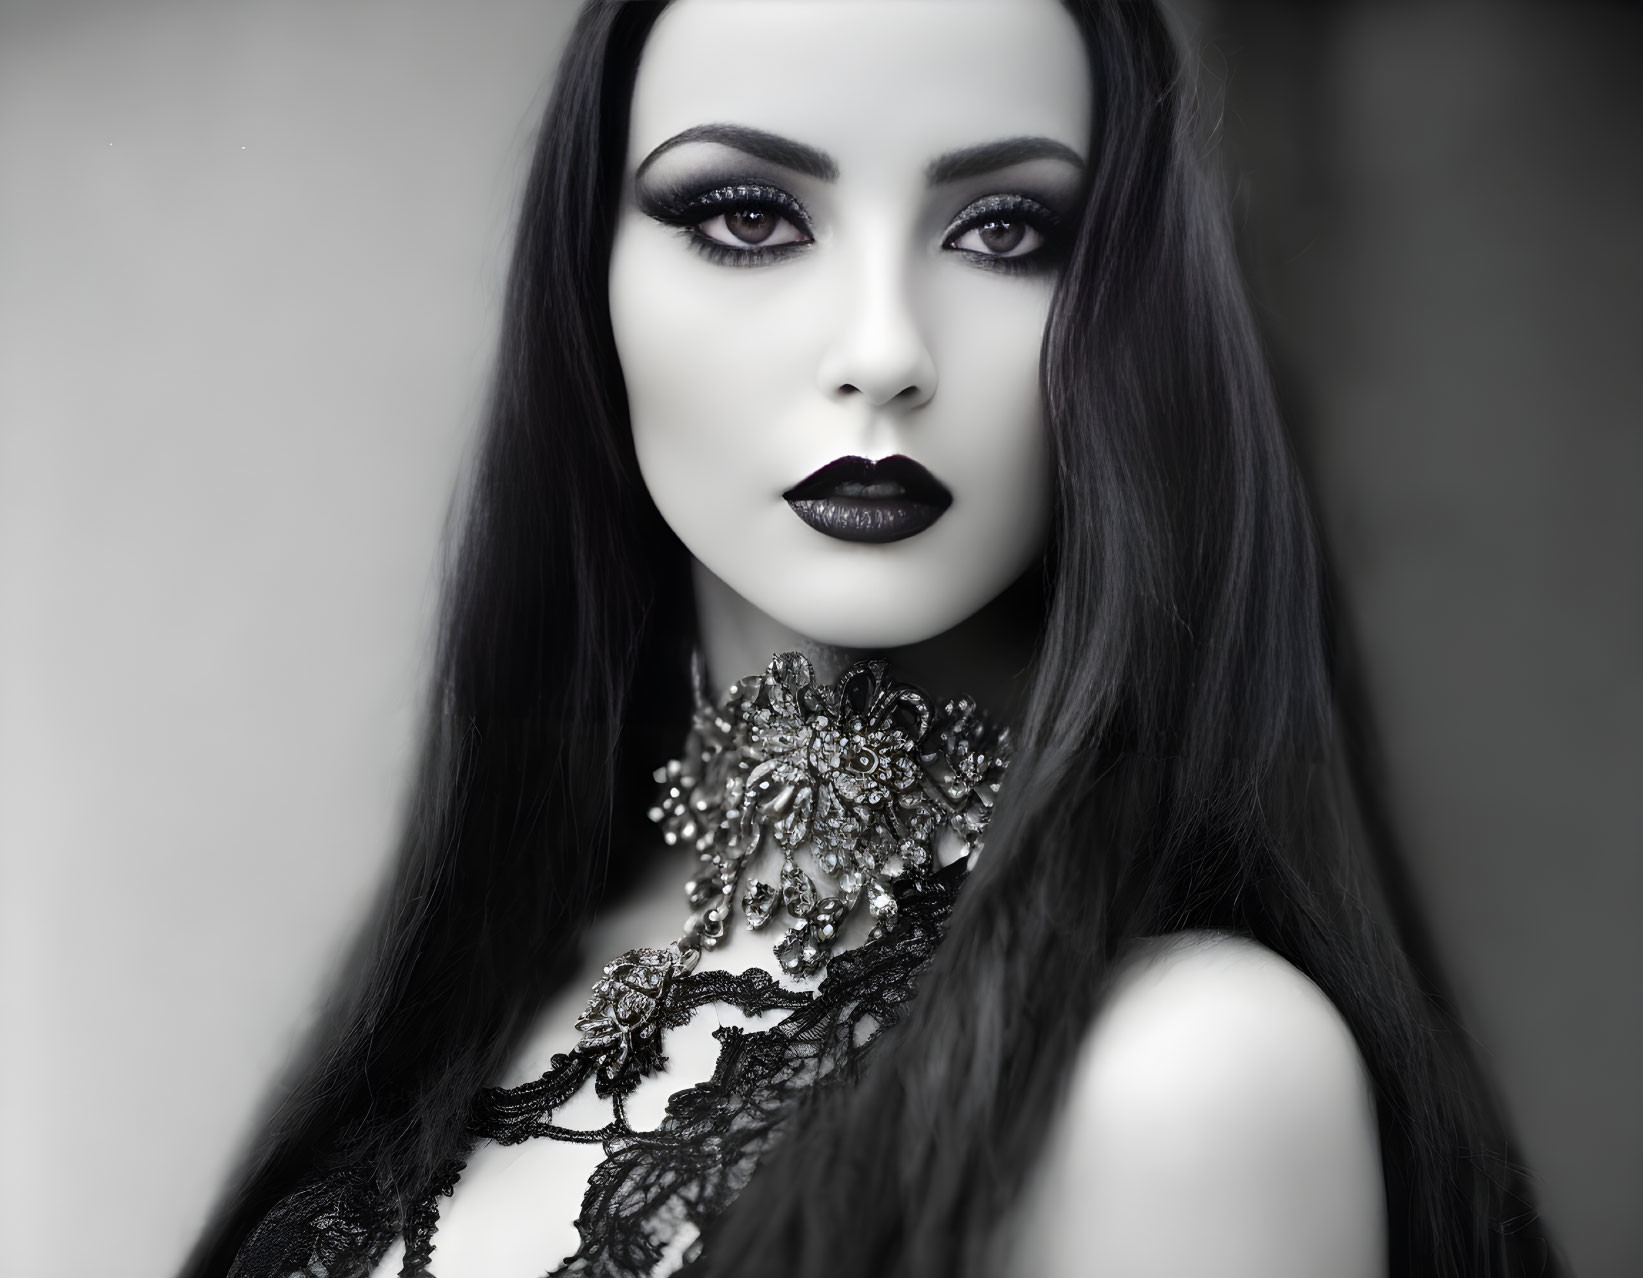 Monochrome portrait of woman with dark lipstick and lace choker